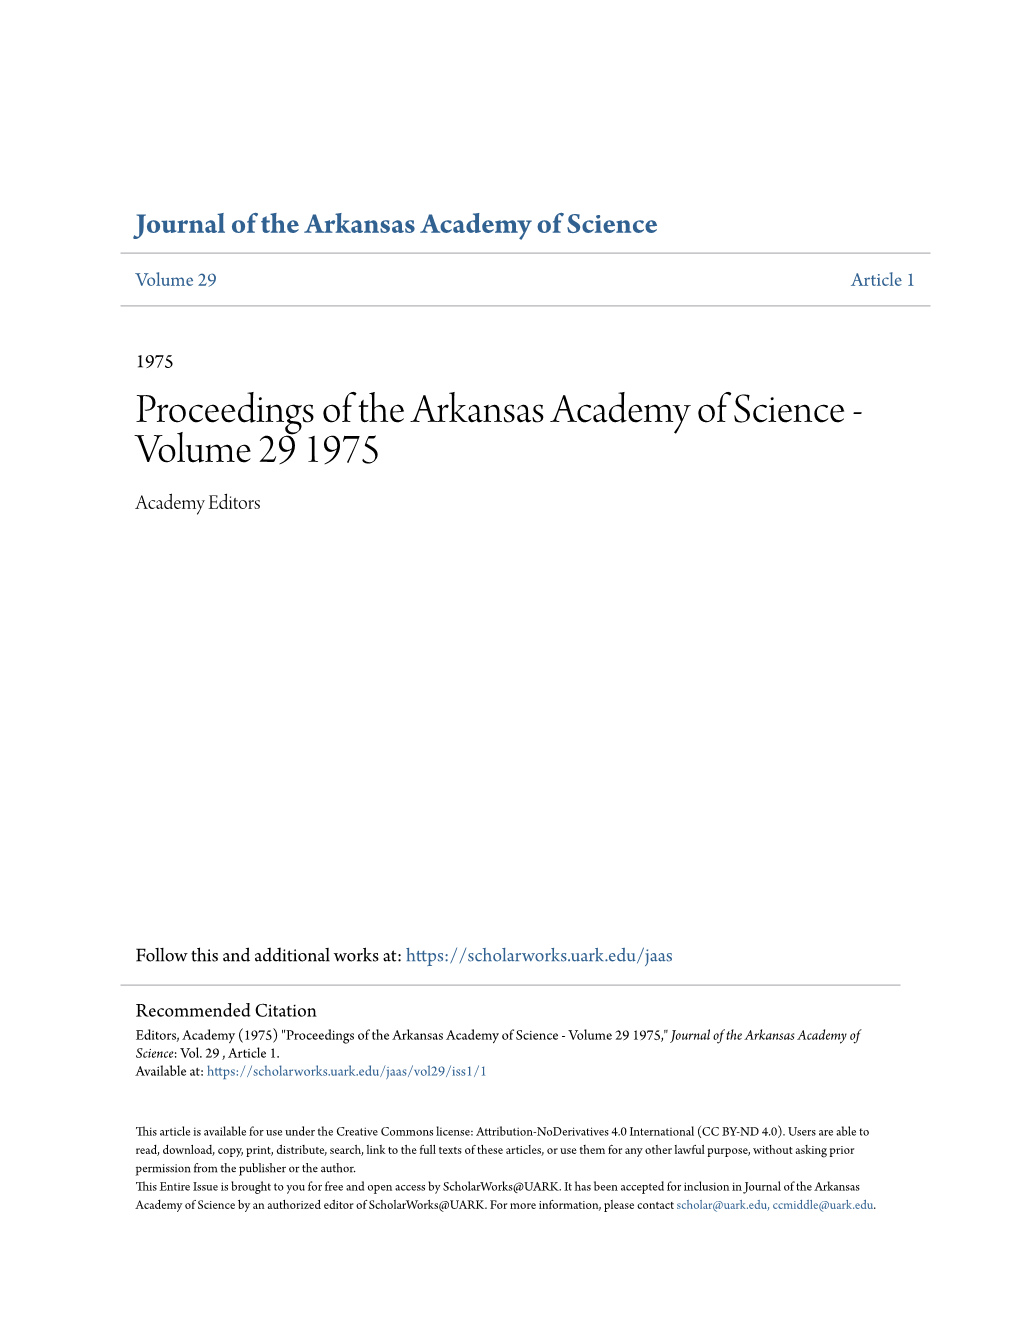 Proceedings of the Arkansas Academy of Science - Volume 29 1975 Academy Editors